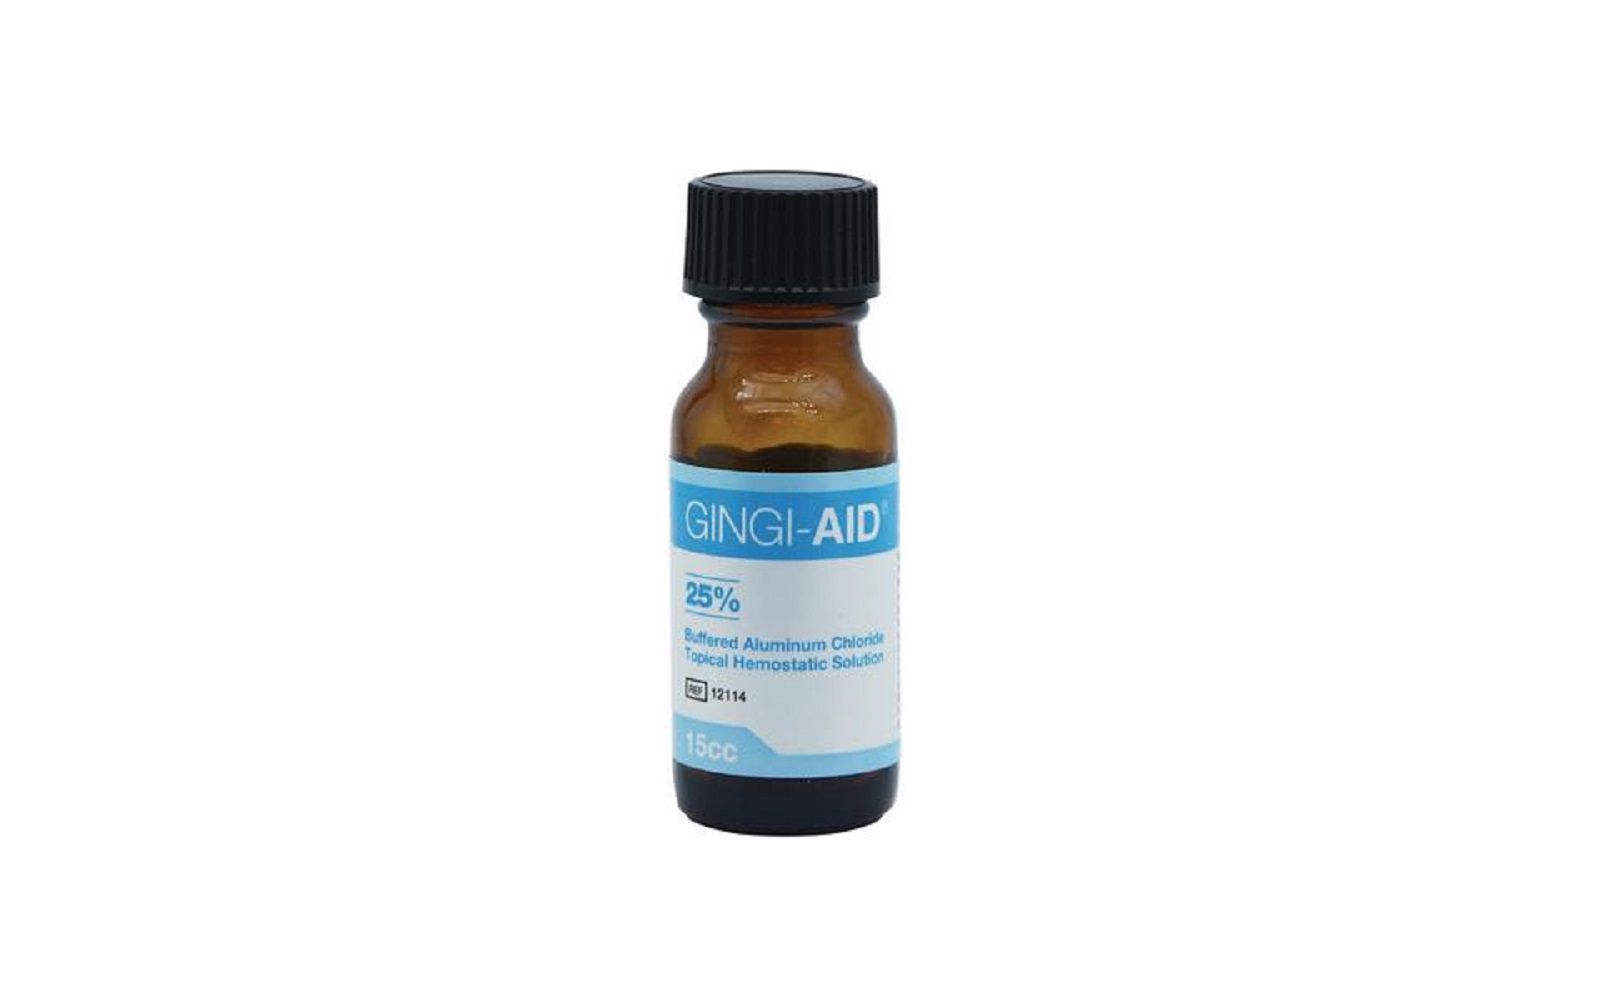 Gingi-aid® astringent solution – 25% aluminum chloride - gingi-pak